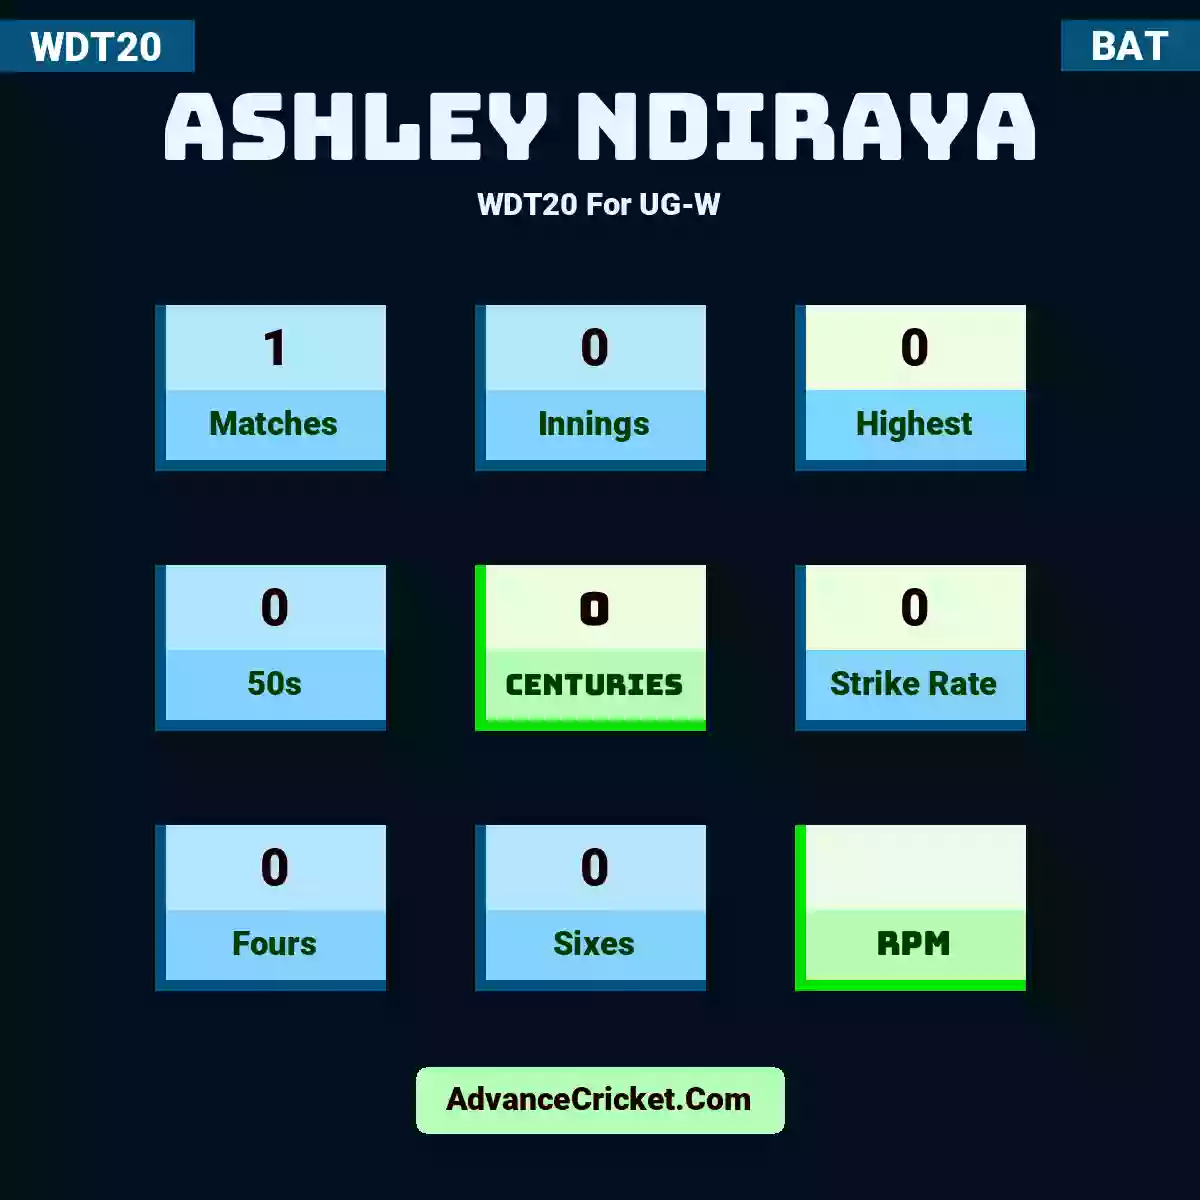 Ashley Ndiraya WDT20  For UG-W, Ashley Ndiraya played 1 matches, scored 0 runs as highest, 0 half-centuries, and 0 centuries, with a strike rate of 0. A.Ndiraya hit 0 fours and 0 sixes.